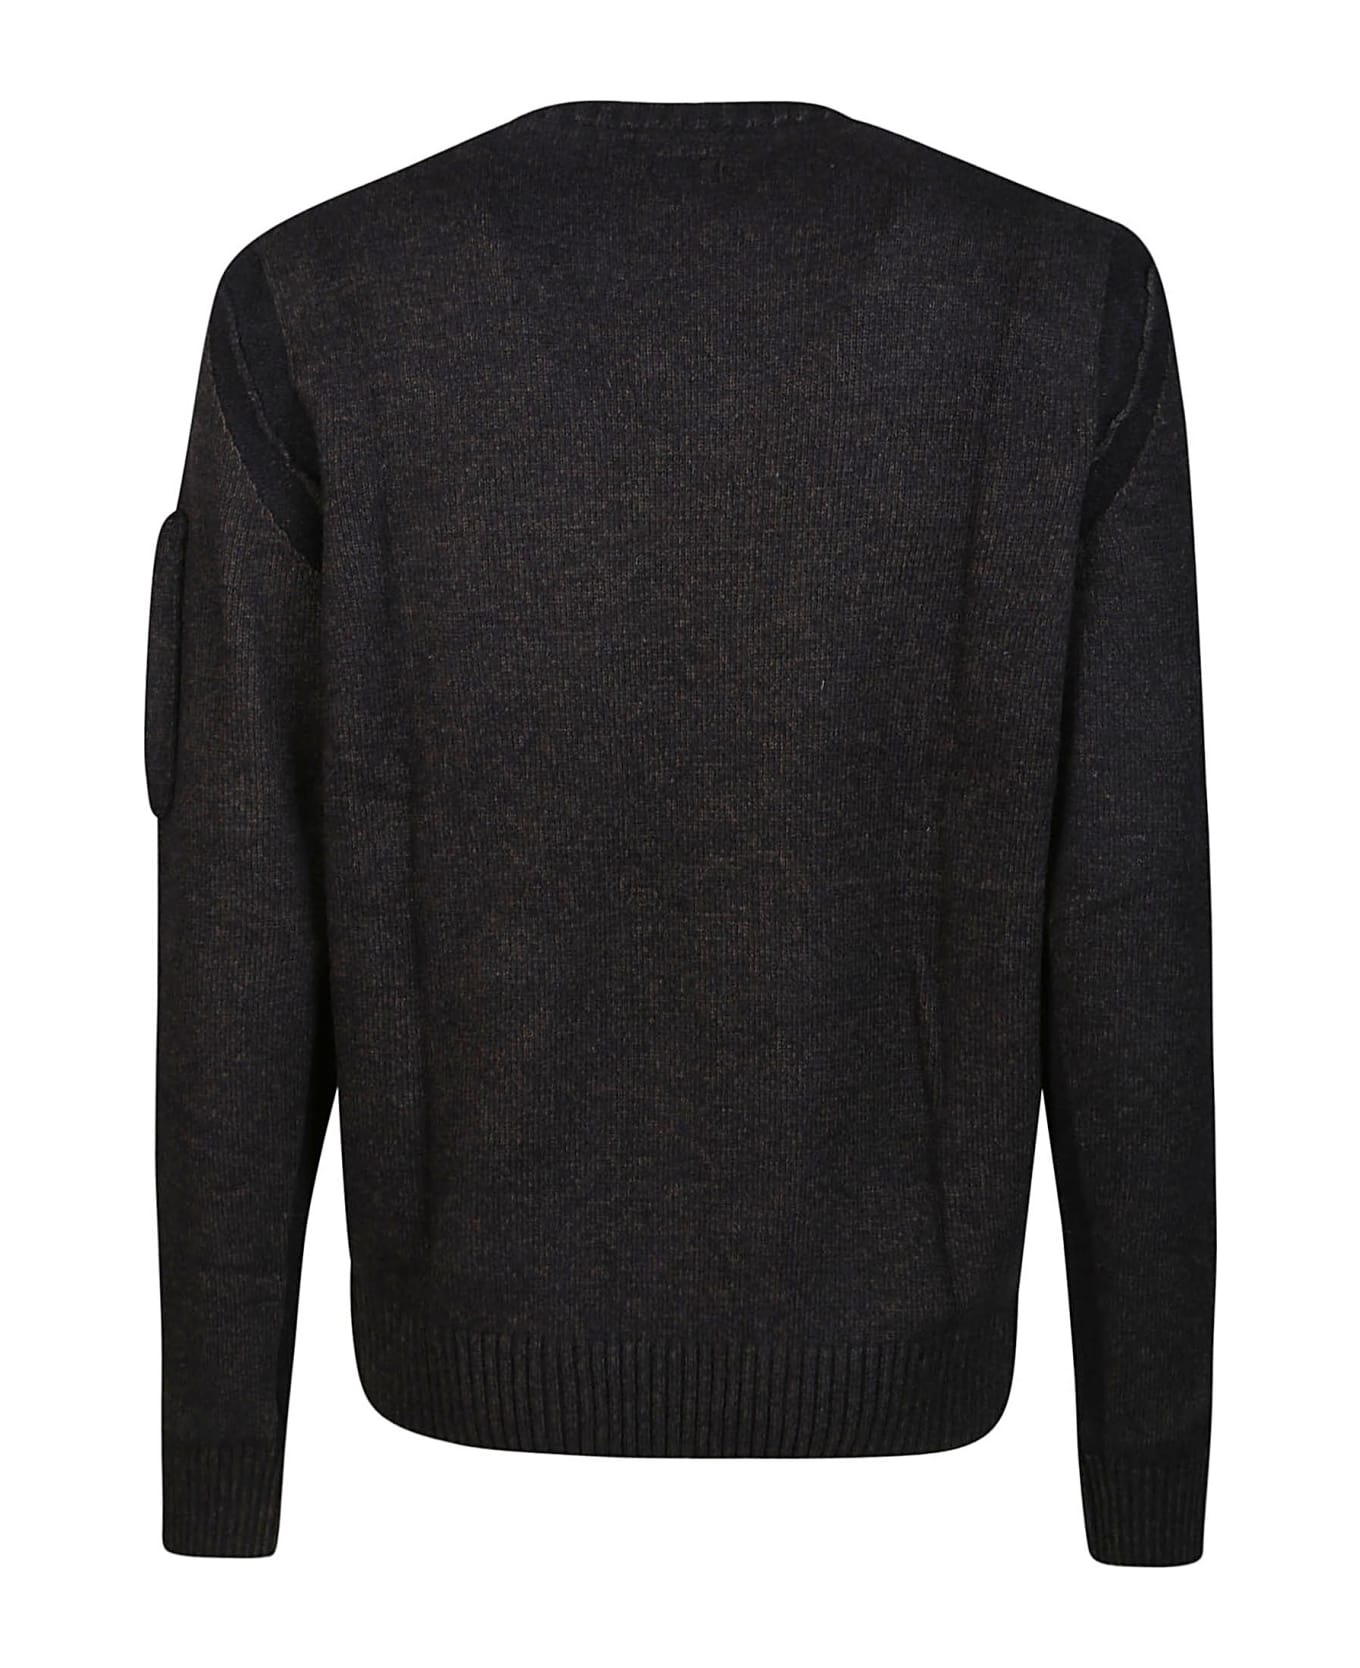 C.P. Company Sweater ニットウェア